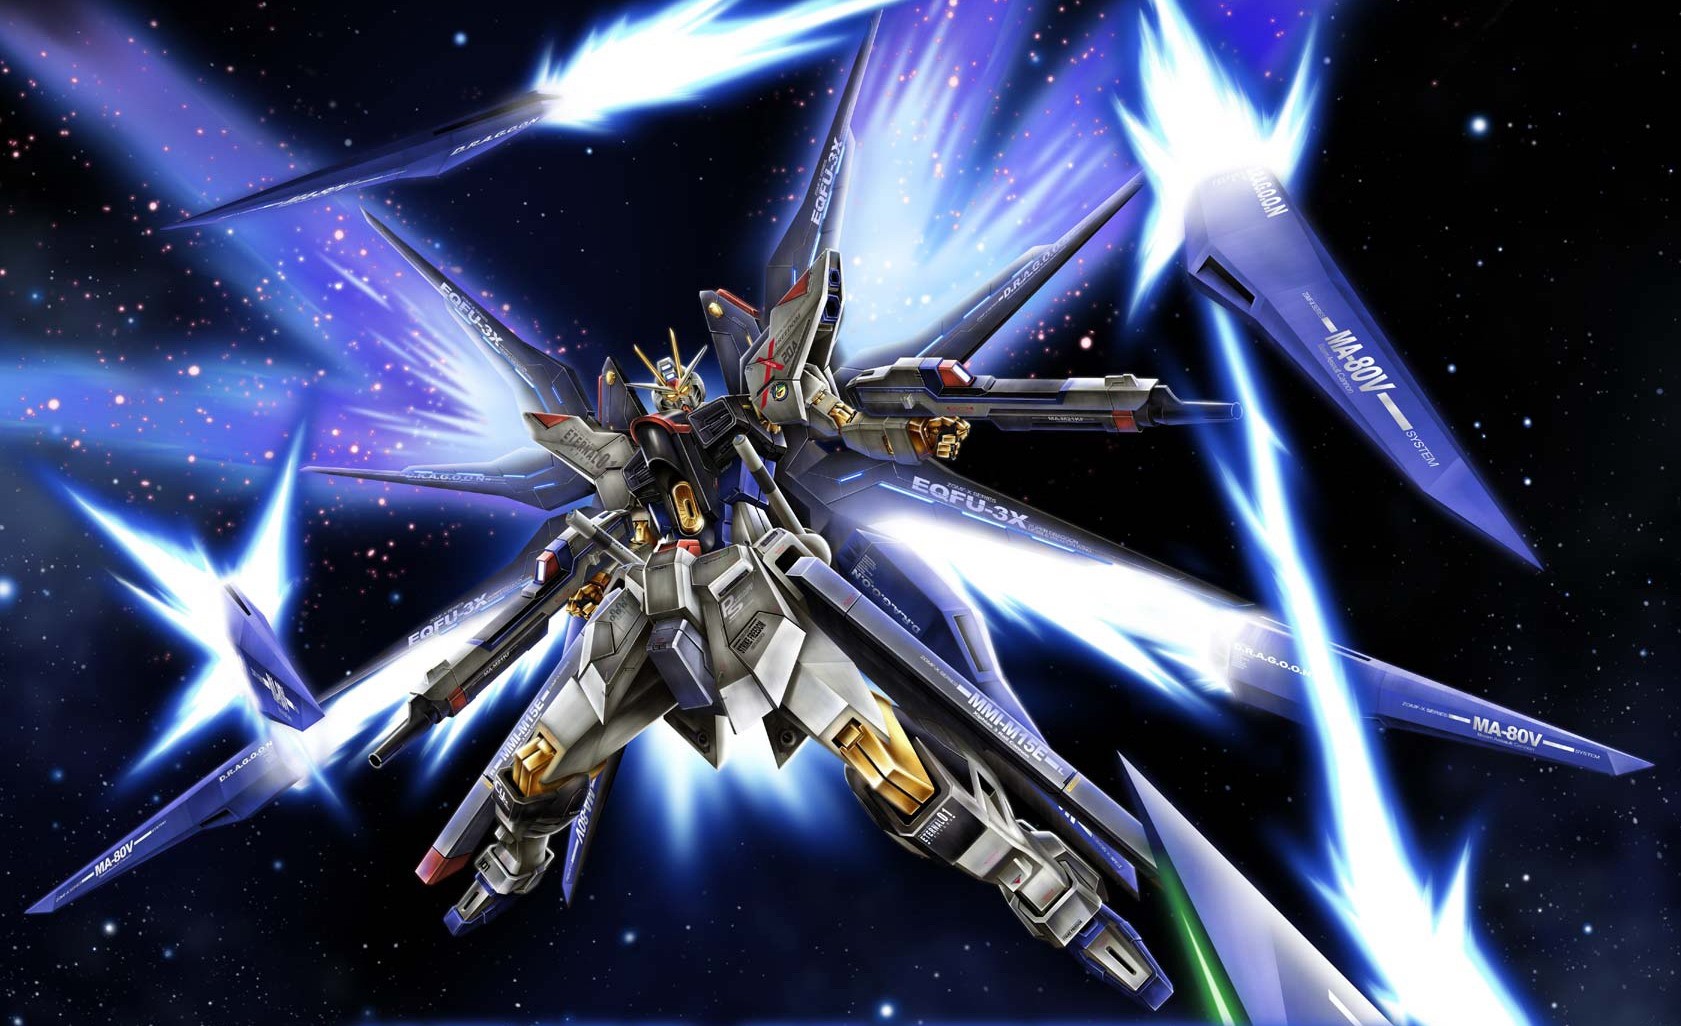 Anime Mobile Suit Gundam Seed Gundam 1681x1026 Wallpaper Wallhaven Cc